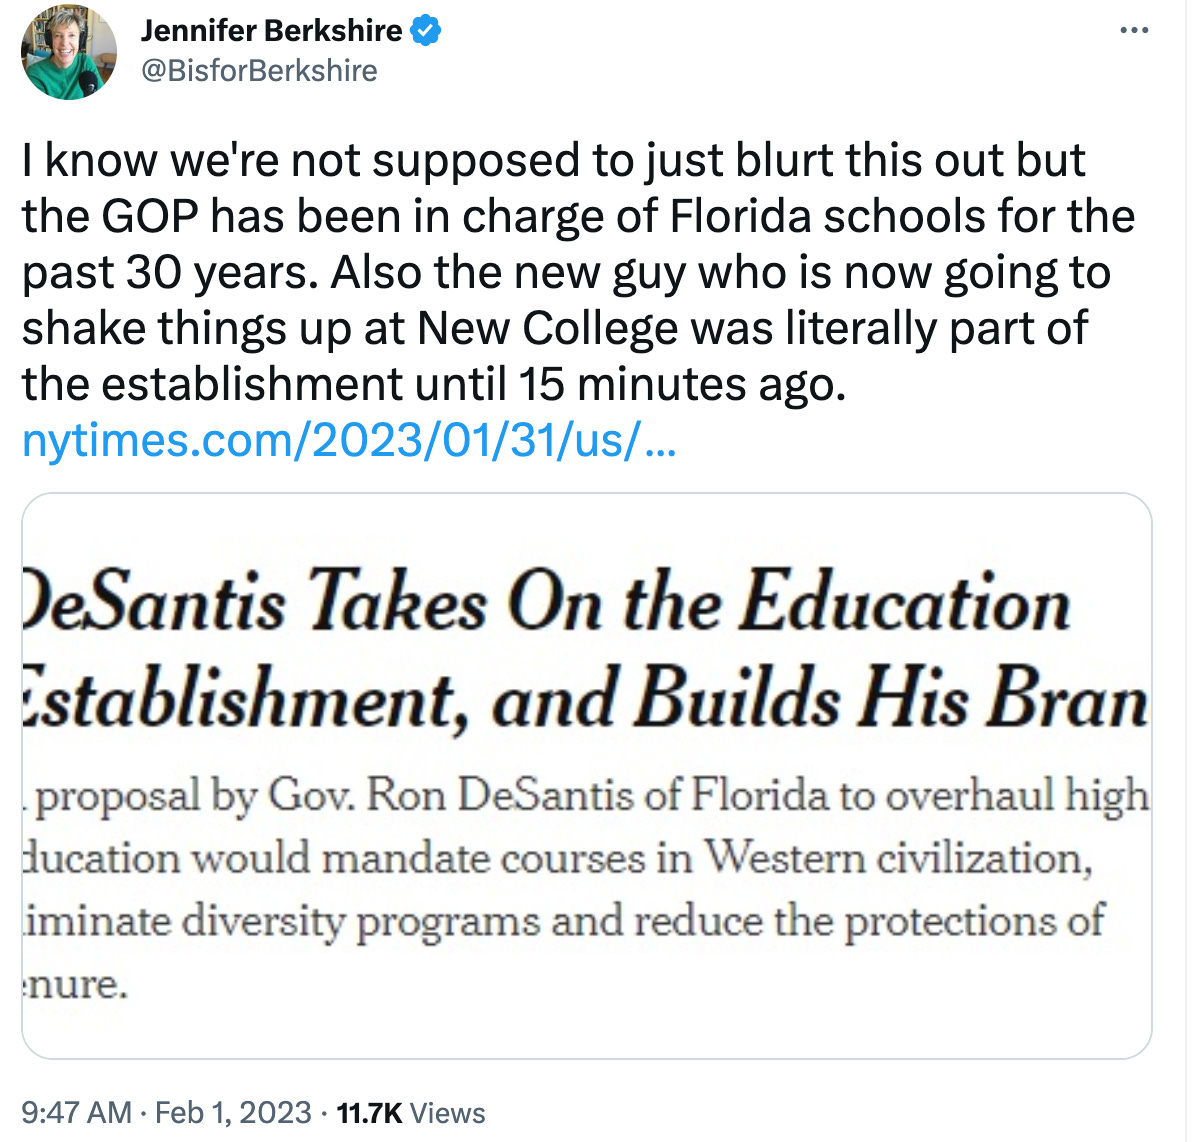 Tweet from Jennifer Berkshire debunking the Times claim that DeSantis is taking on the establishment